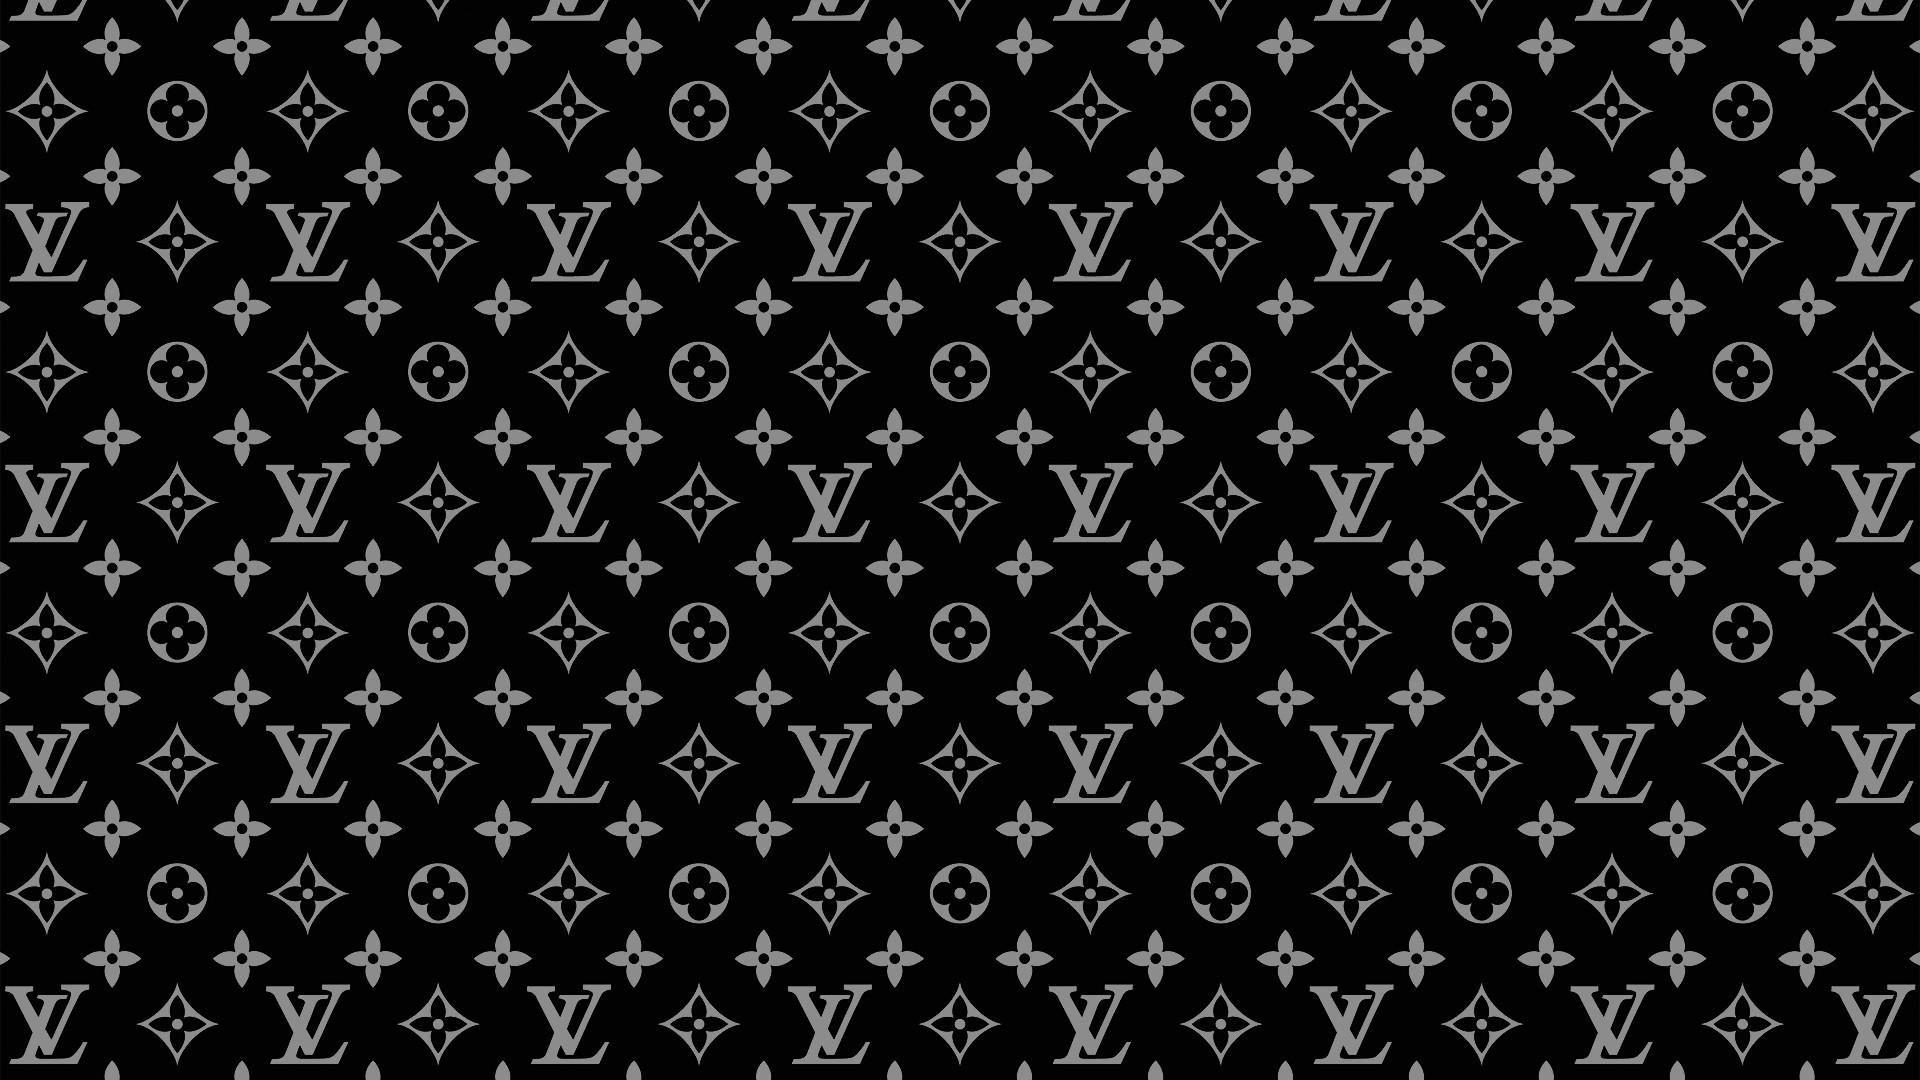 Louis Vuitton Wallpaper